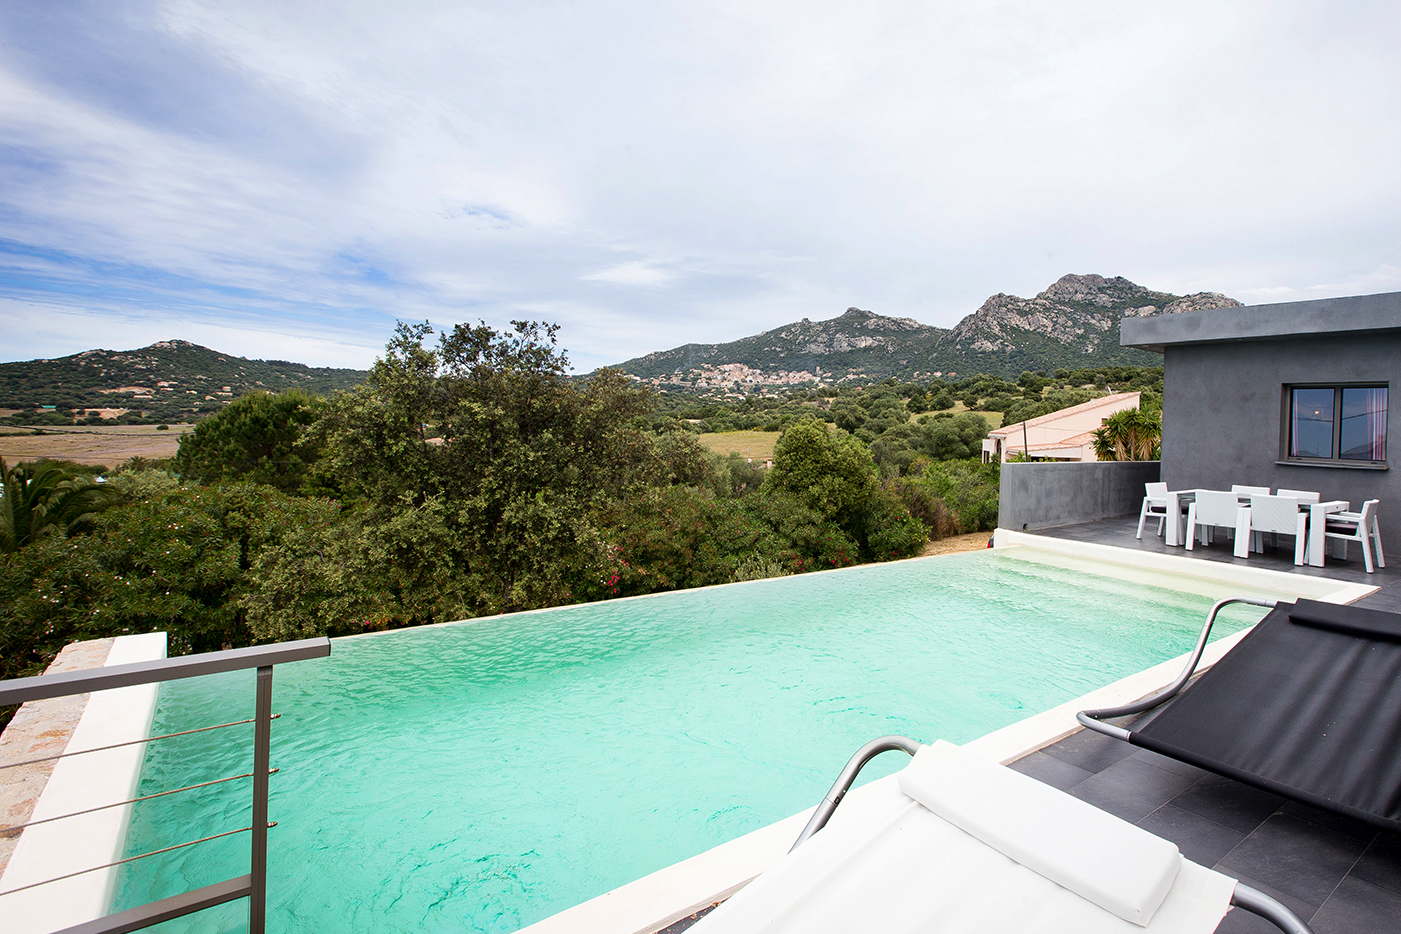 Villa Arinella with pool and seaview in Corsica - DOMIZILE REISEN